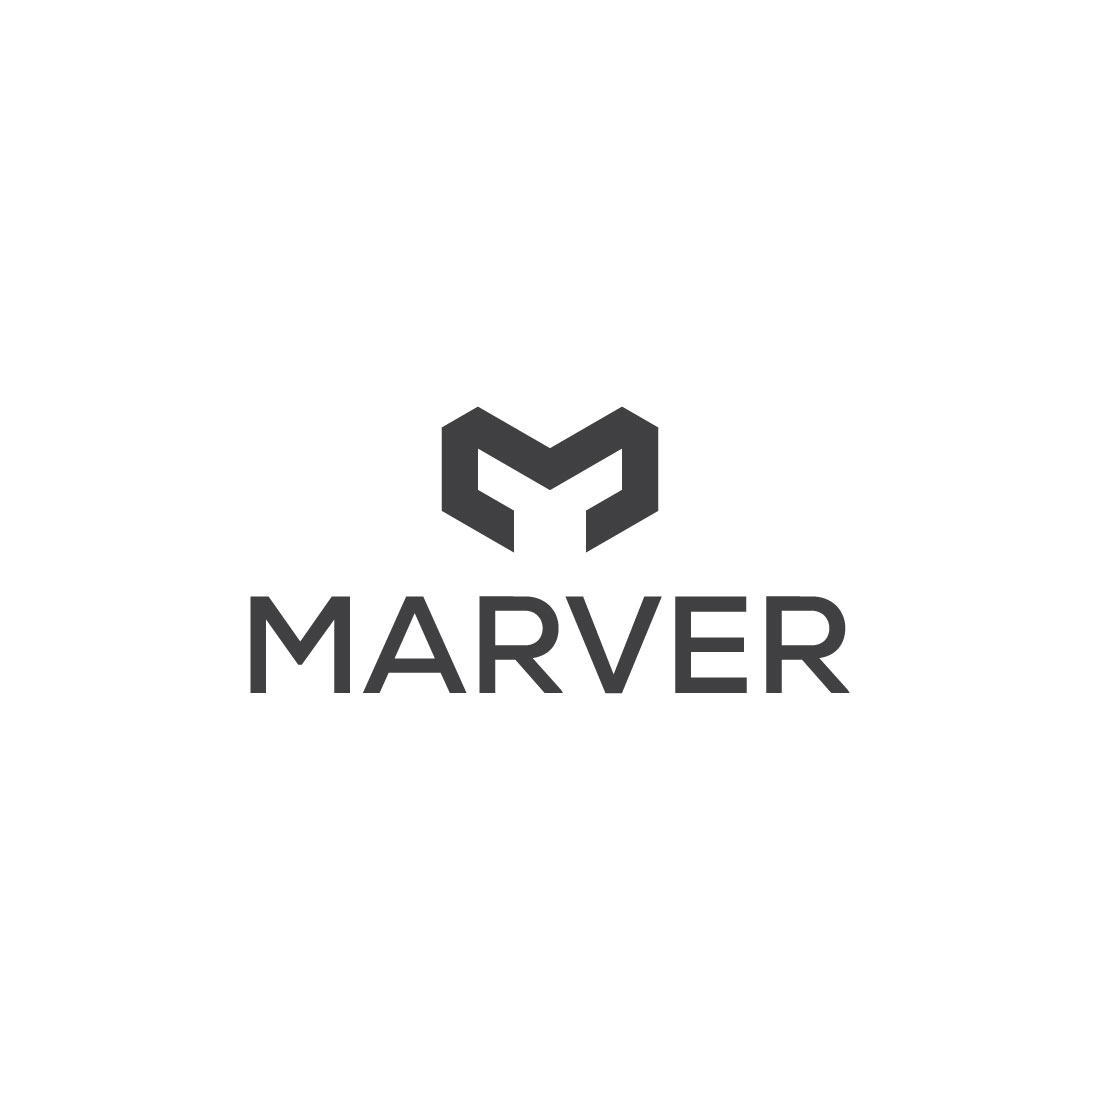 M Letter Minimal Logo Design cover image.